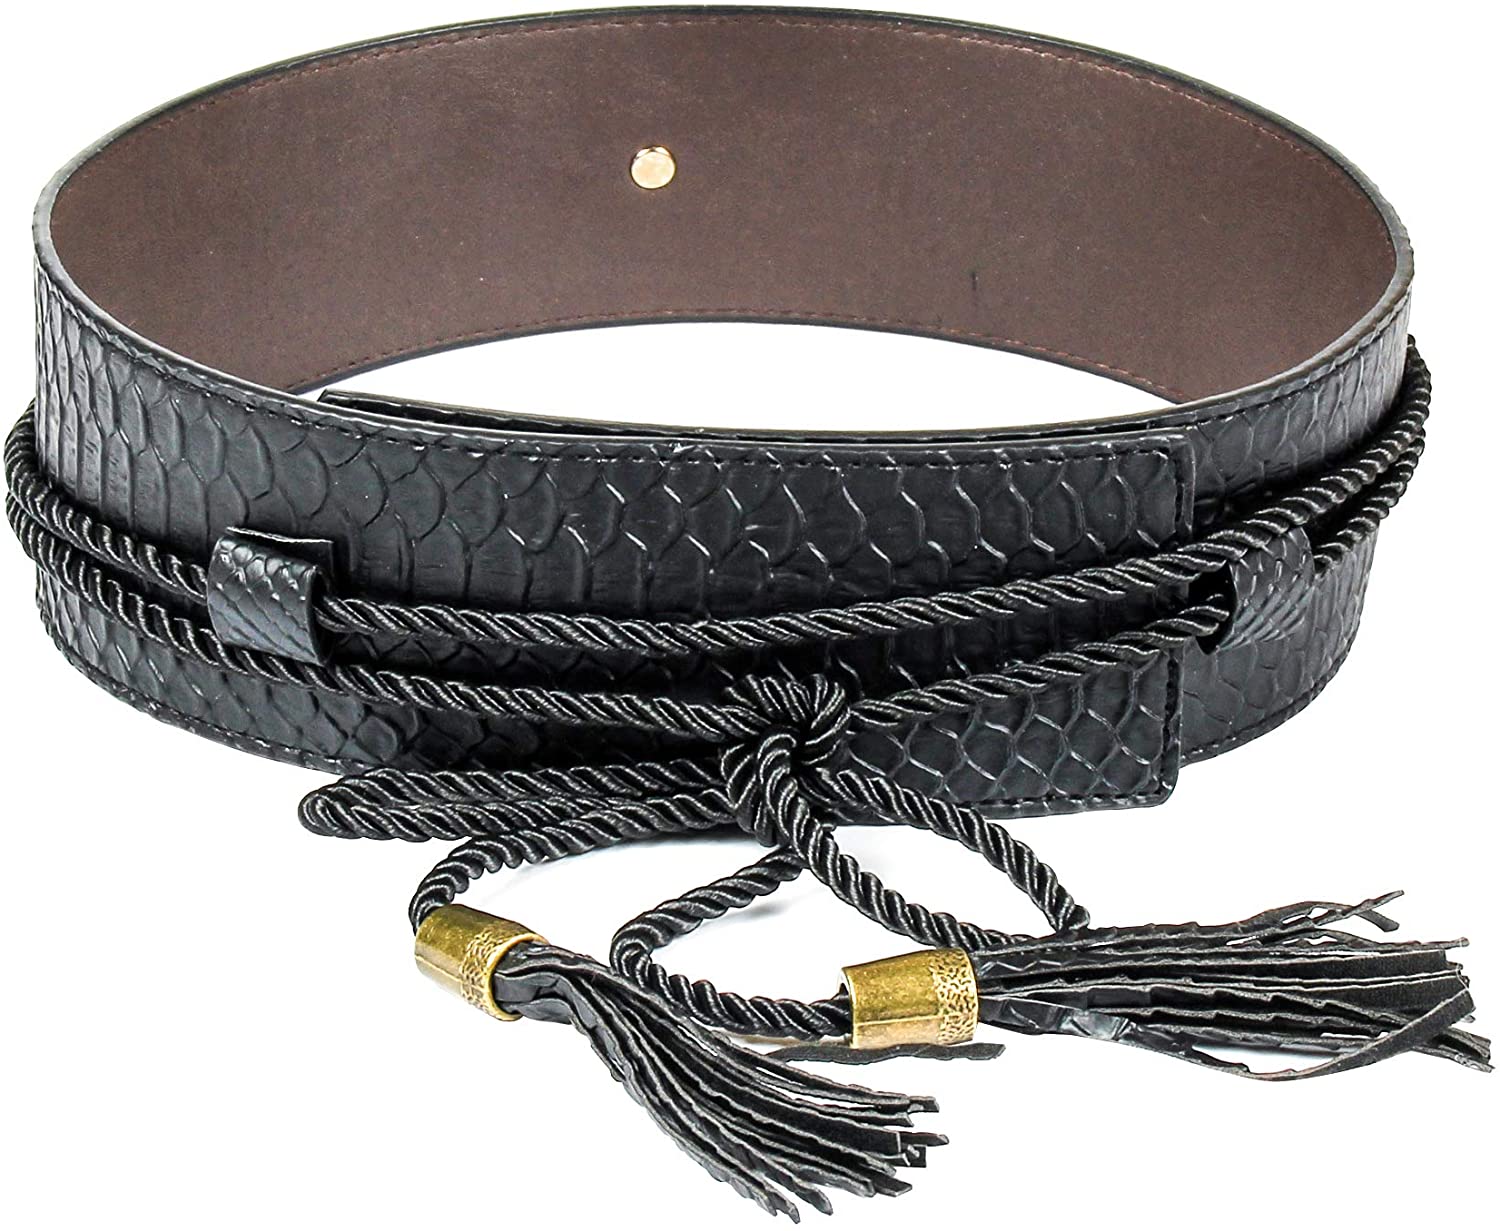 Mveomtd Women's Leather Waist Belt